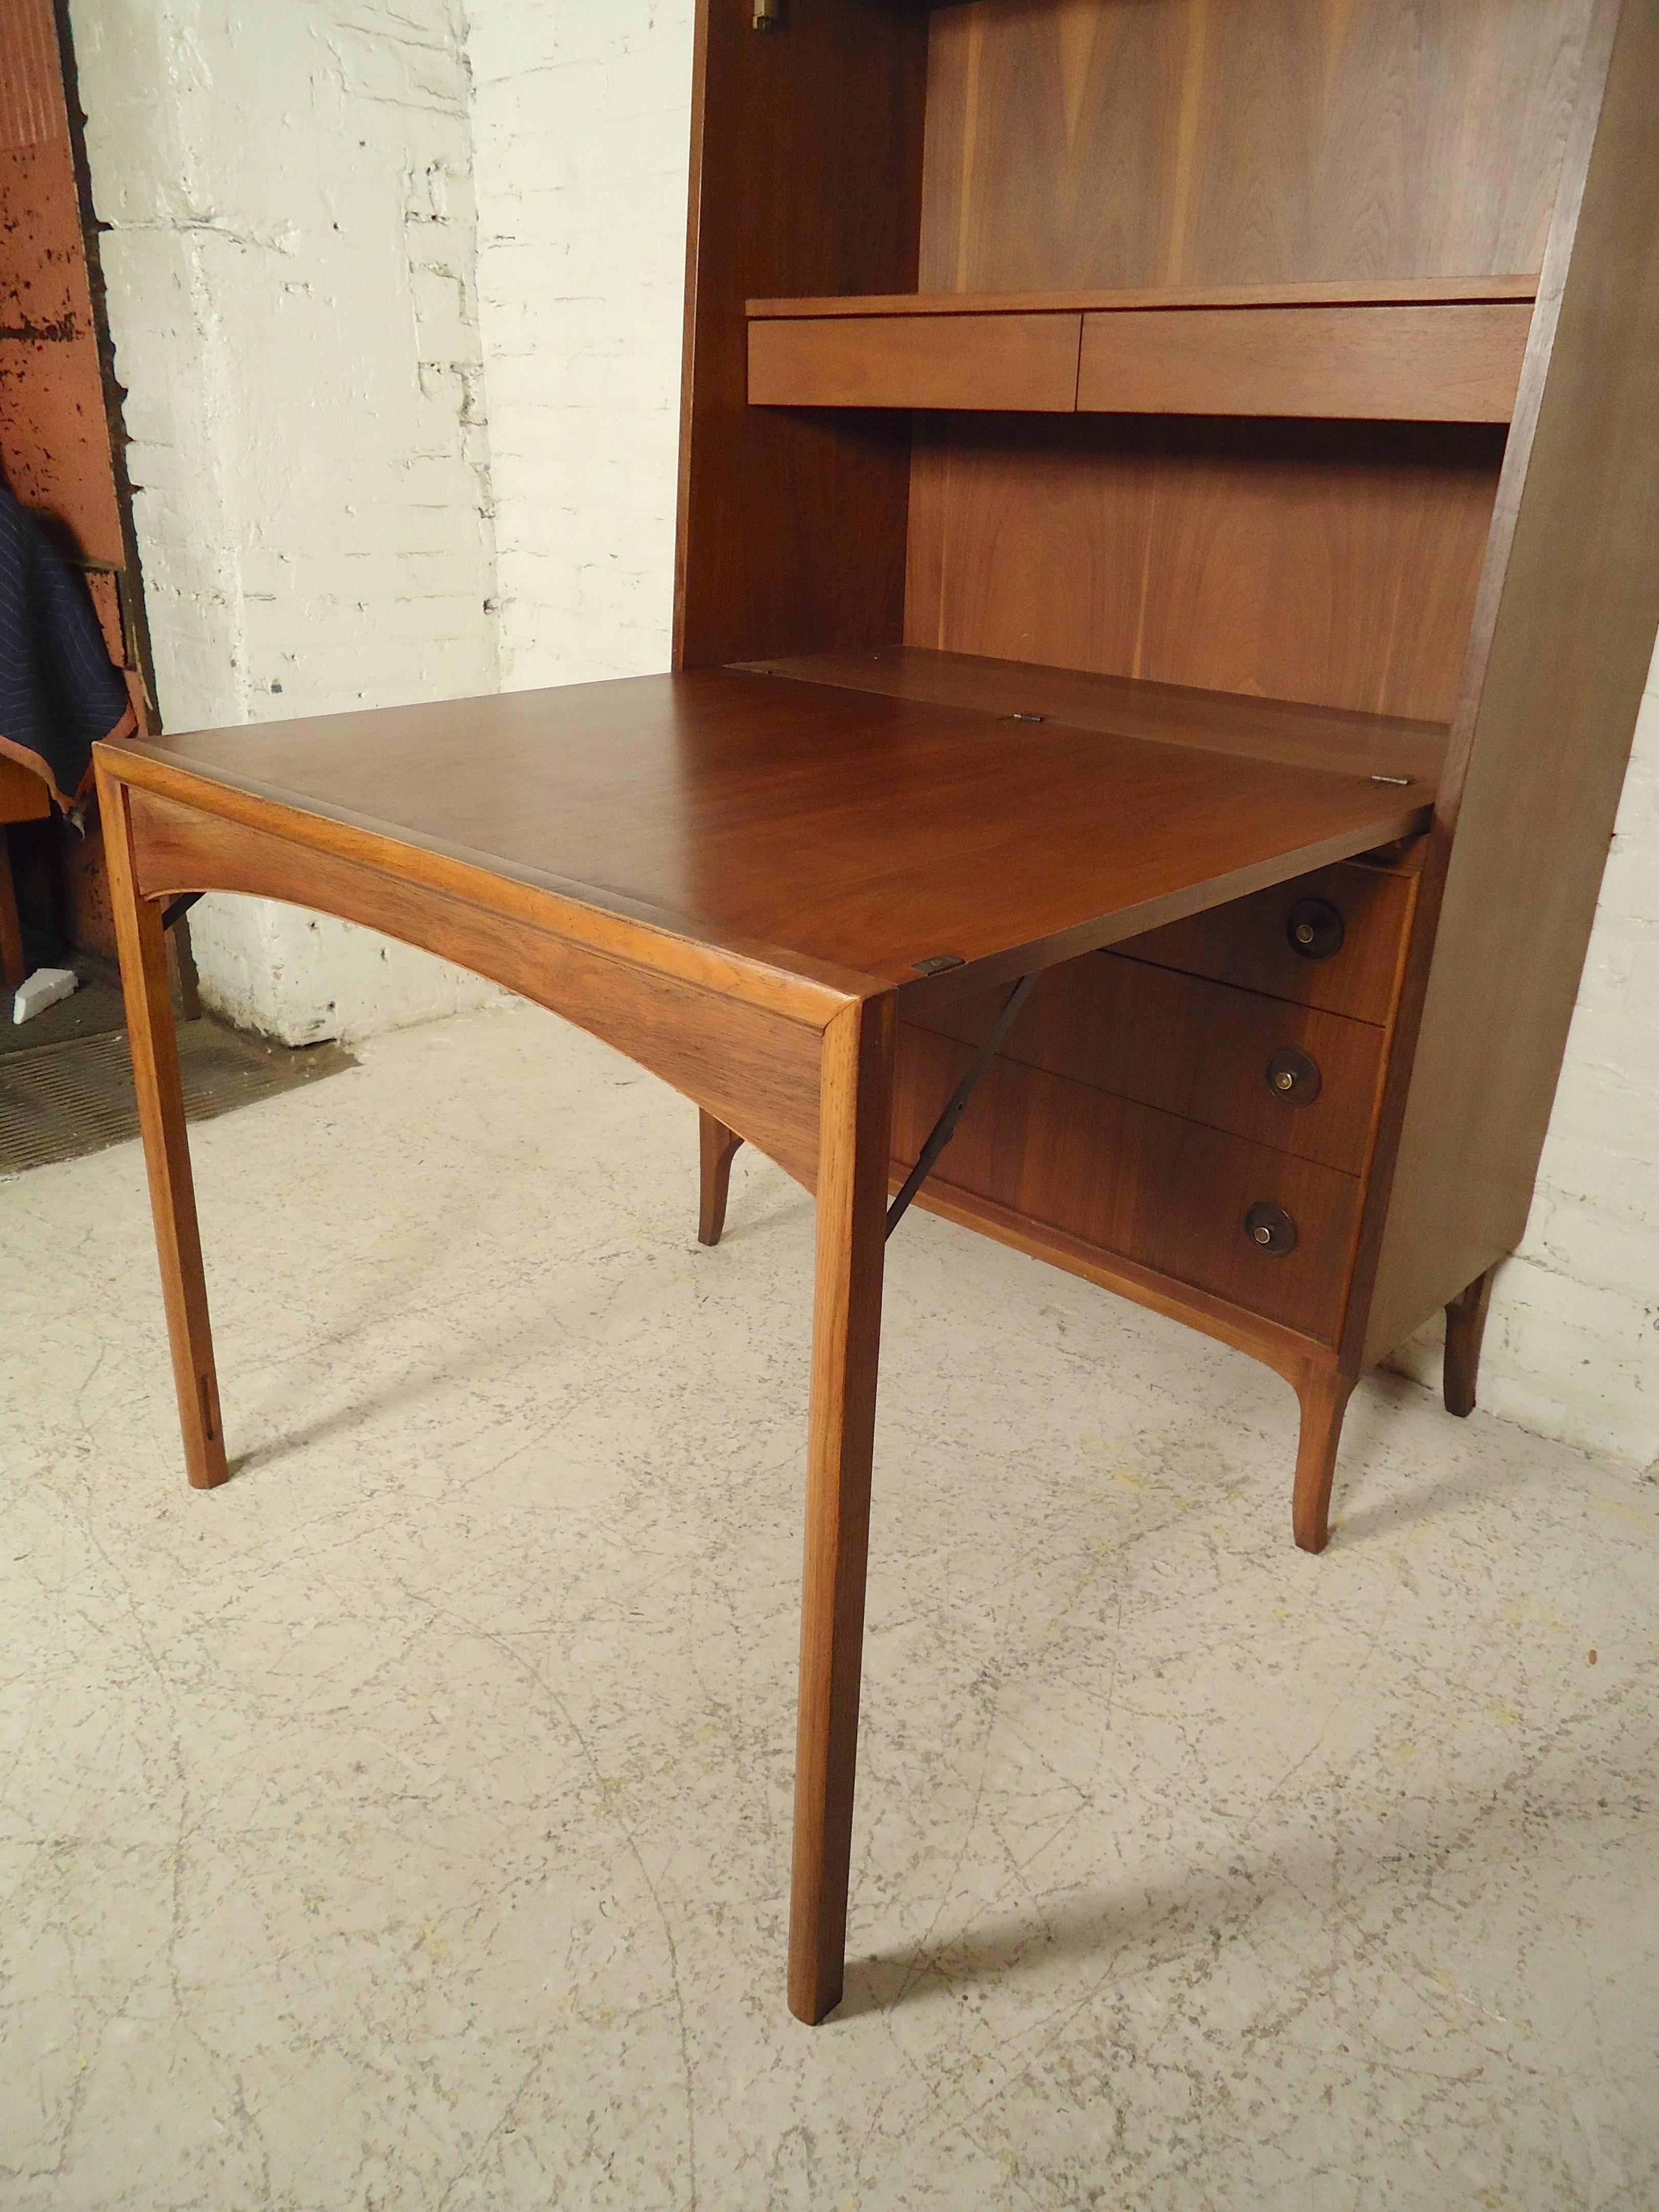 Unique cabinet with drop front desk by Kroehler. Walnut grain throughout, deep desk top, cabinet and drawer storage.
Desk top: 34